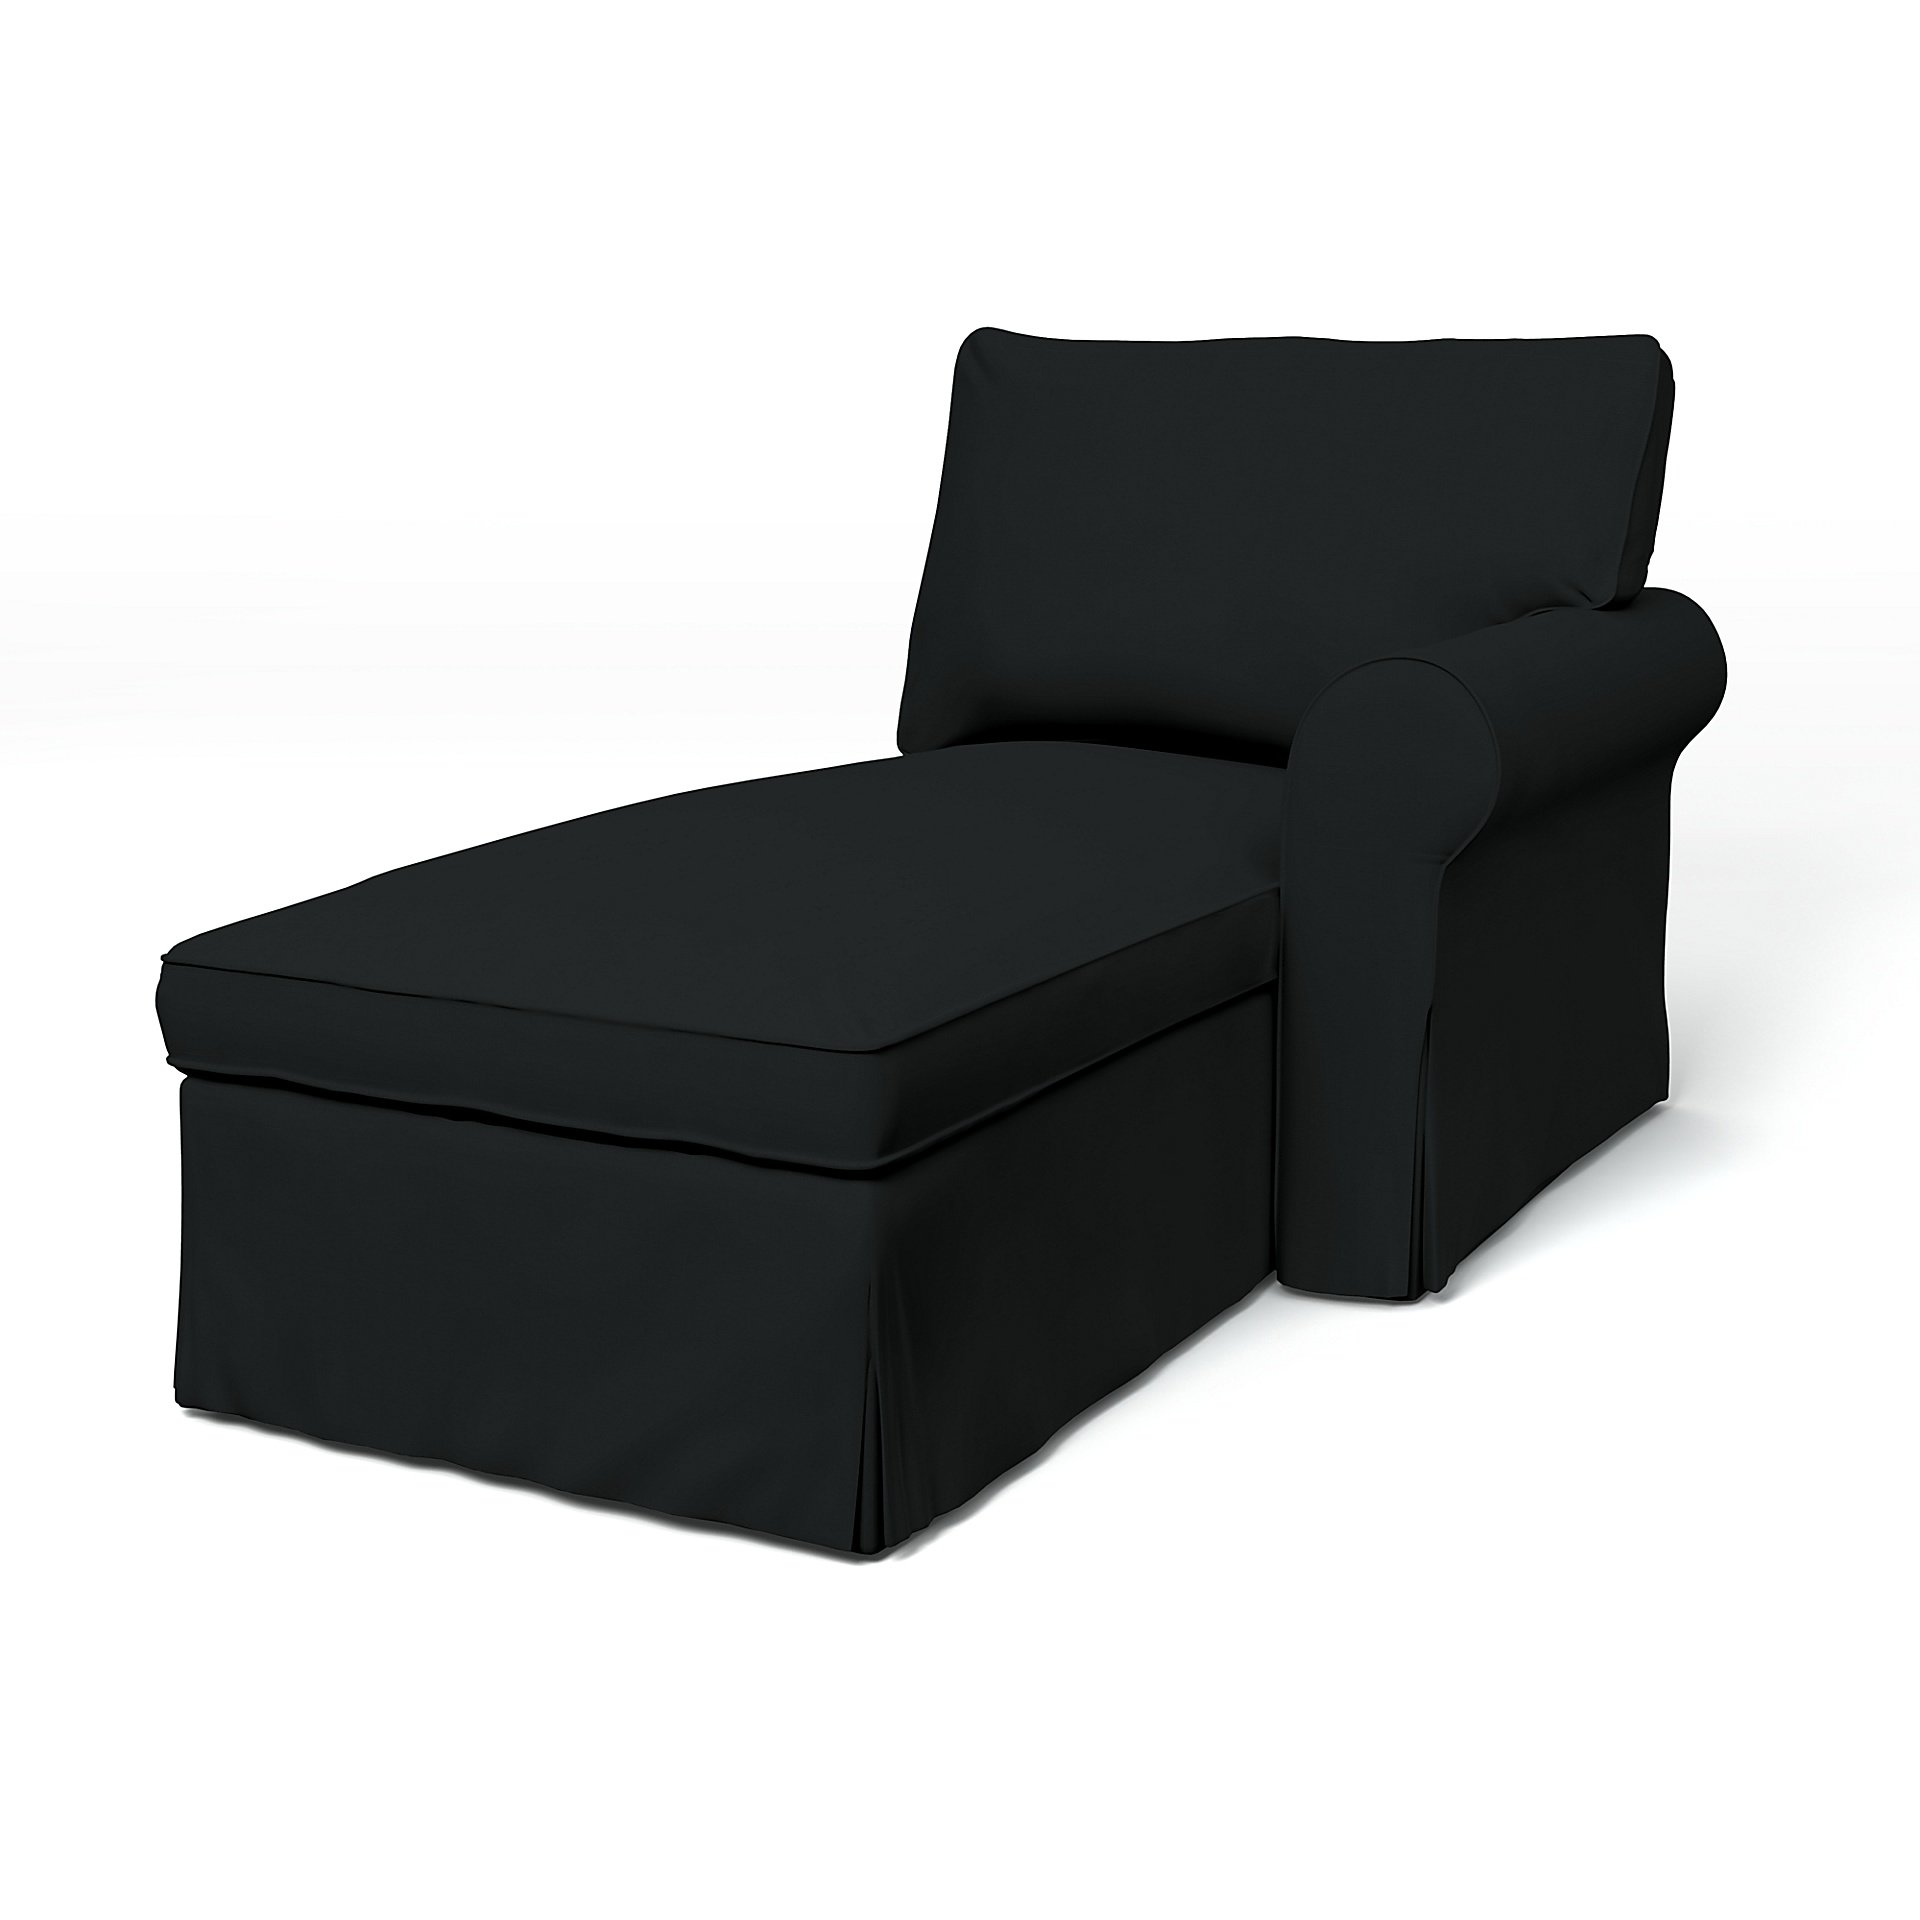 IKEA - Ektorp Chaise with Right Armrest Cover, Jet Black, Cotton - Bemz